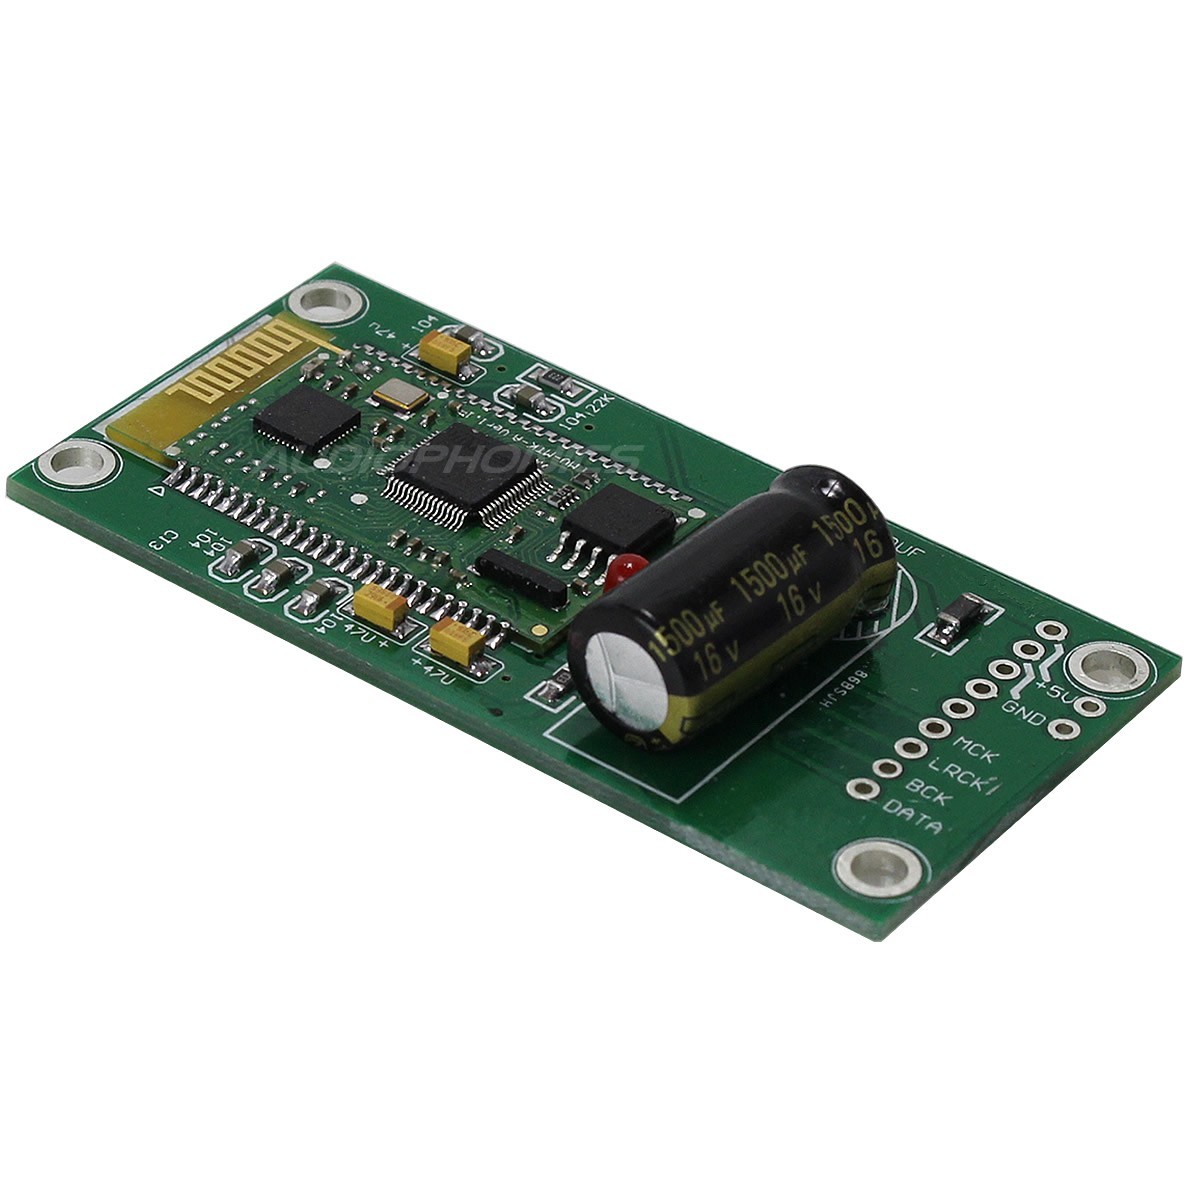 Bluetooth module board to I2S for DAC